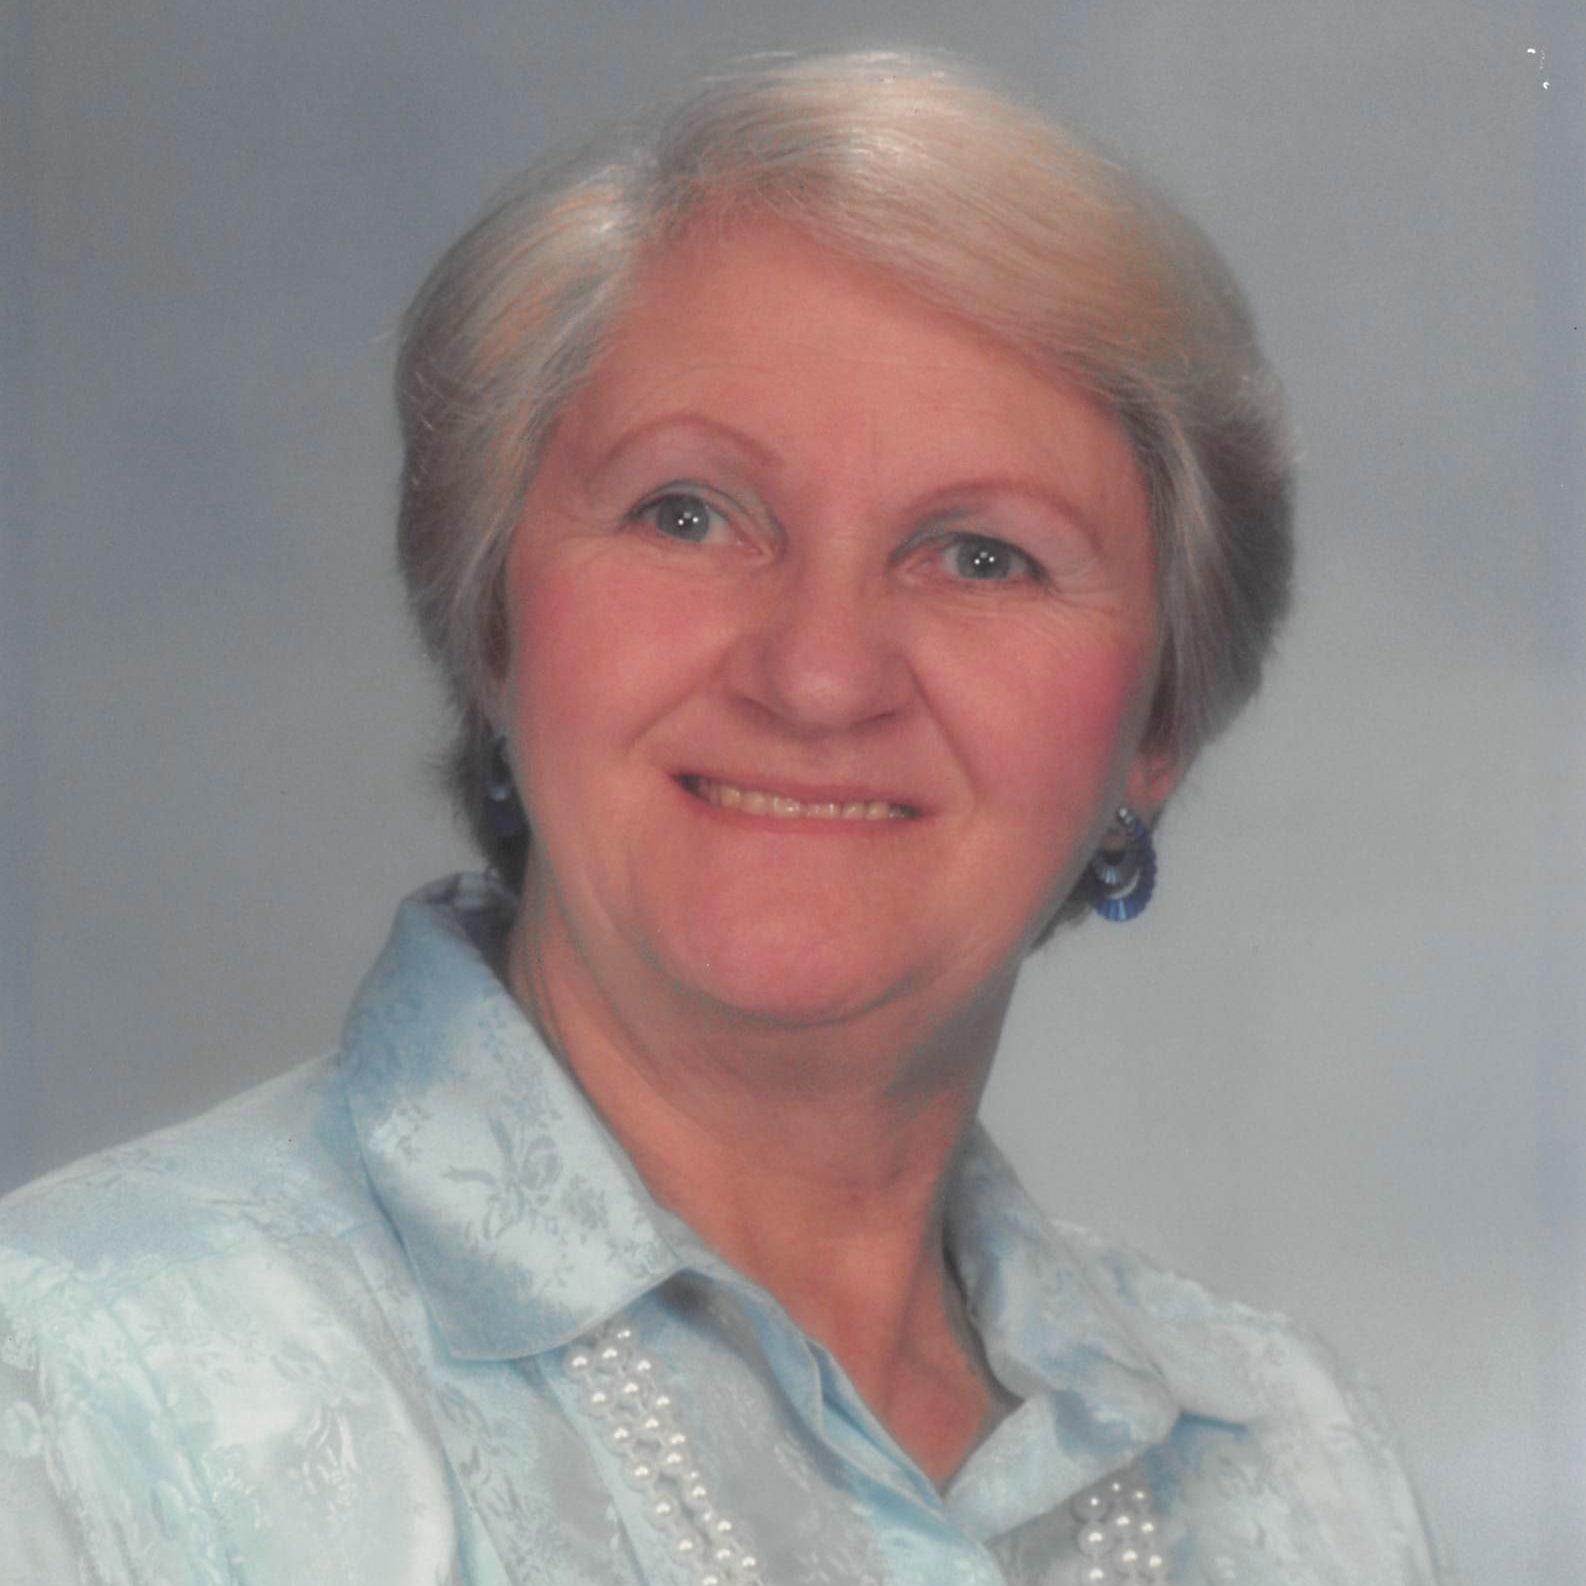 Obituary & Life Story for Dorthy Jean Sorensen Smith | Online ...